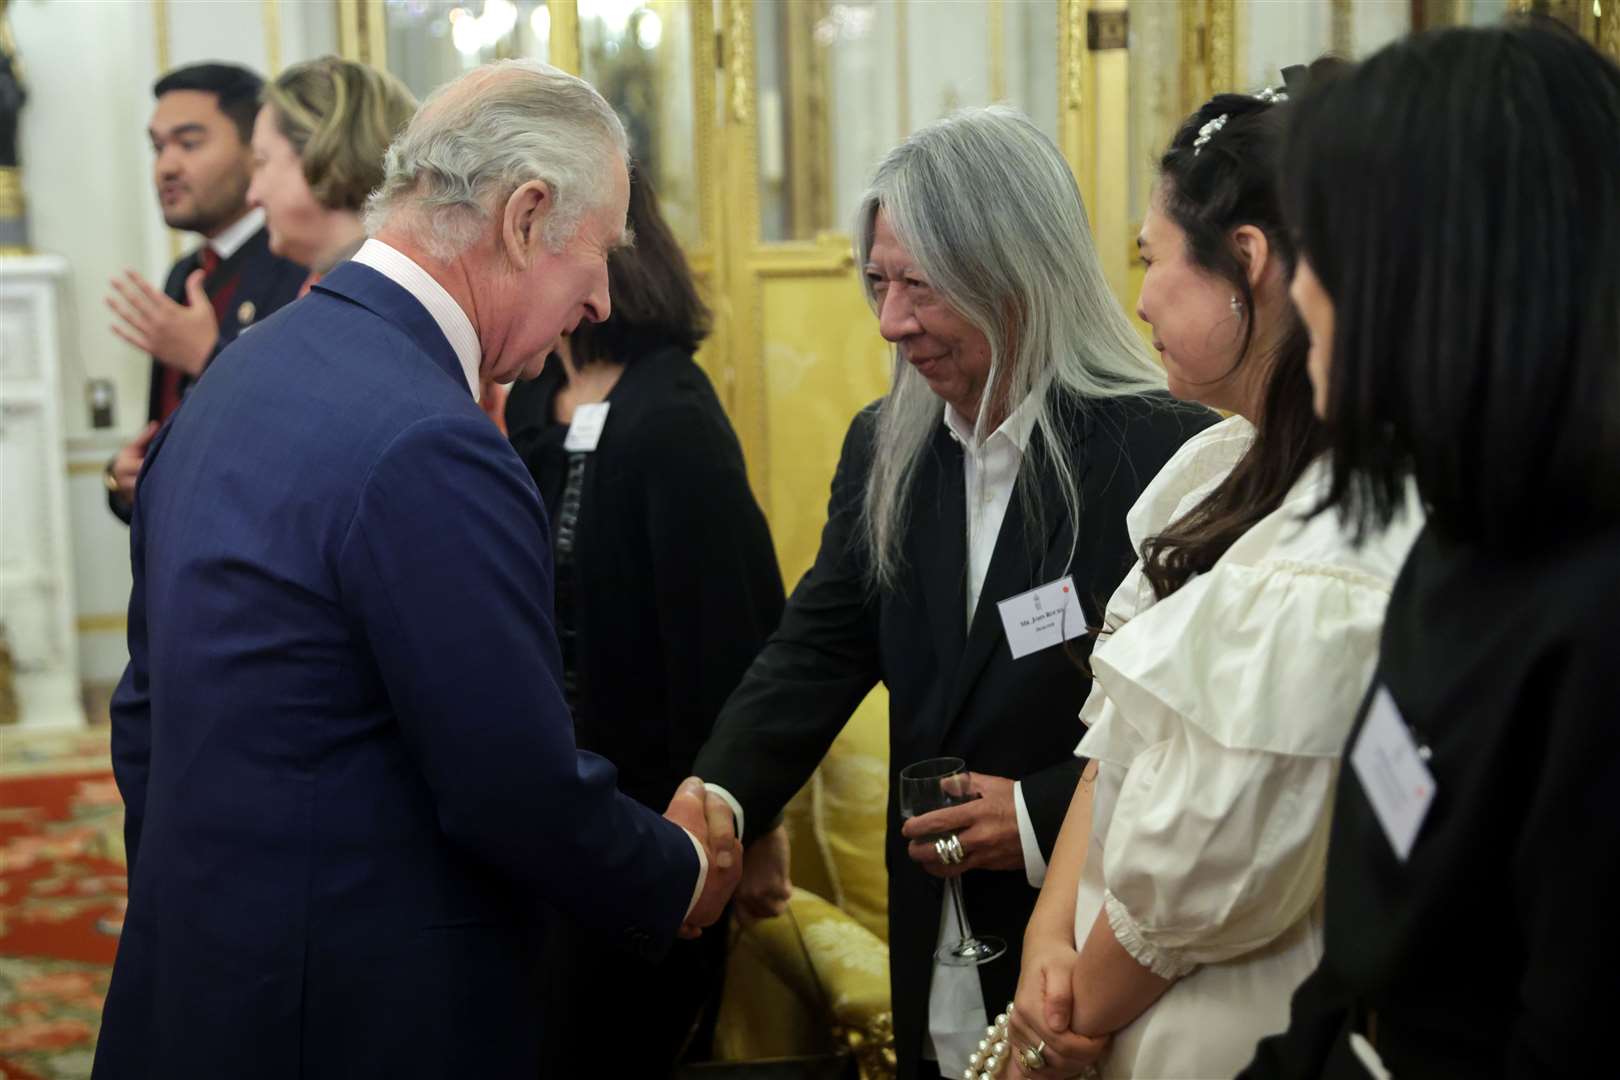 Designer John Rocha greeted the King at Buckingham Palace (Chris Jackson/PA)